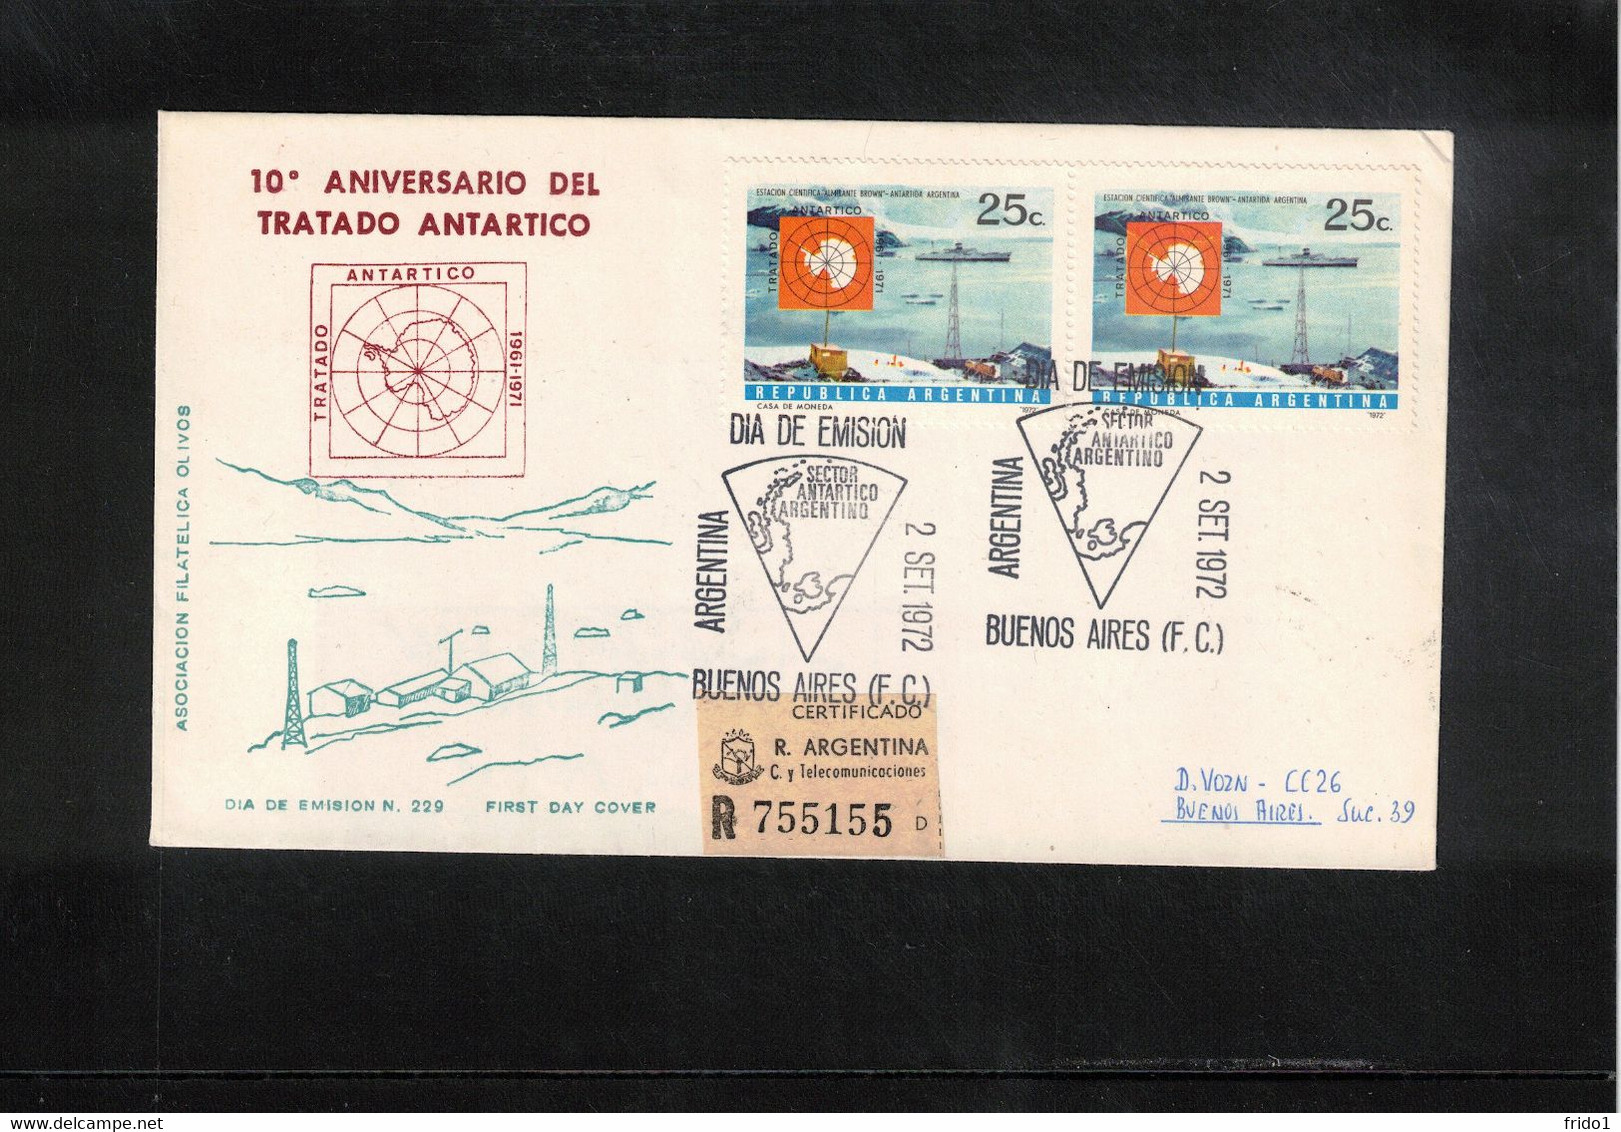 Argentina 1972 10th Anniversary Of Antarctica Treaty Interesting Registered Letter - Trattato Antartico